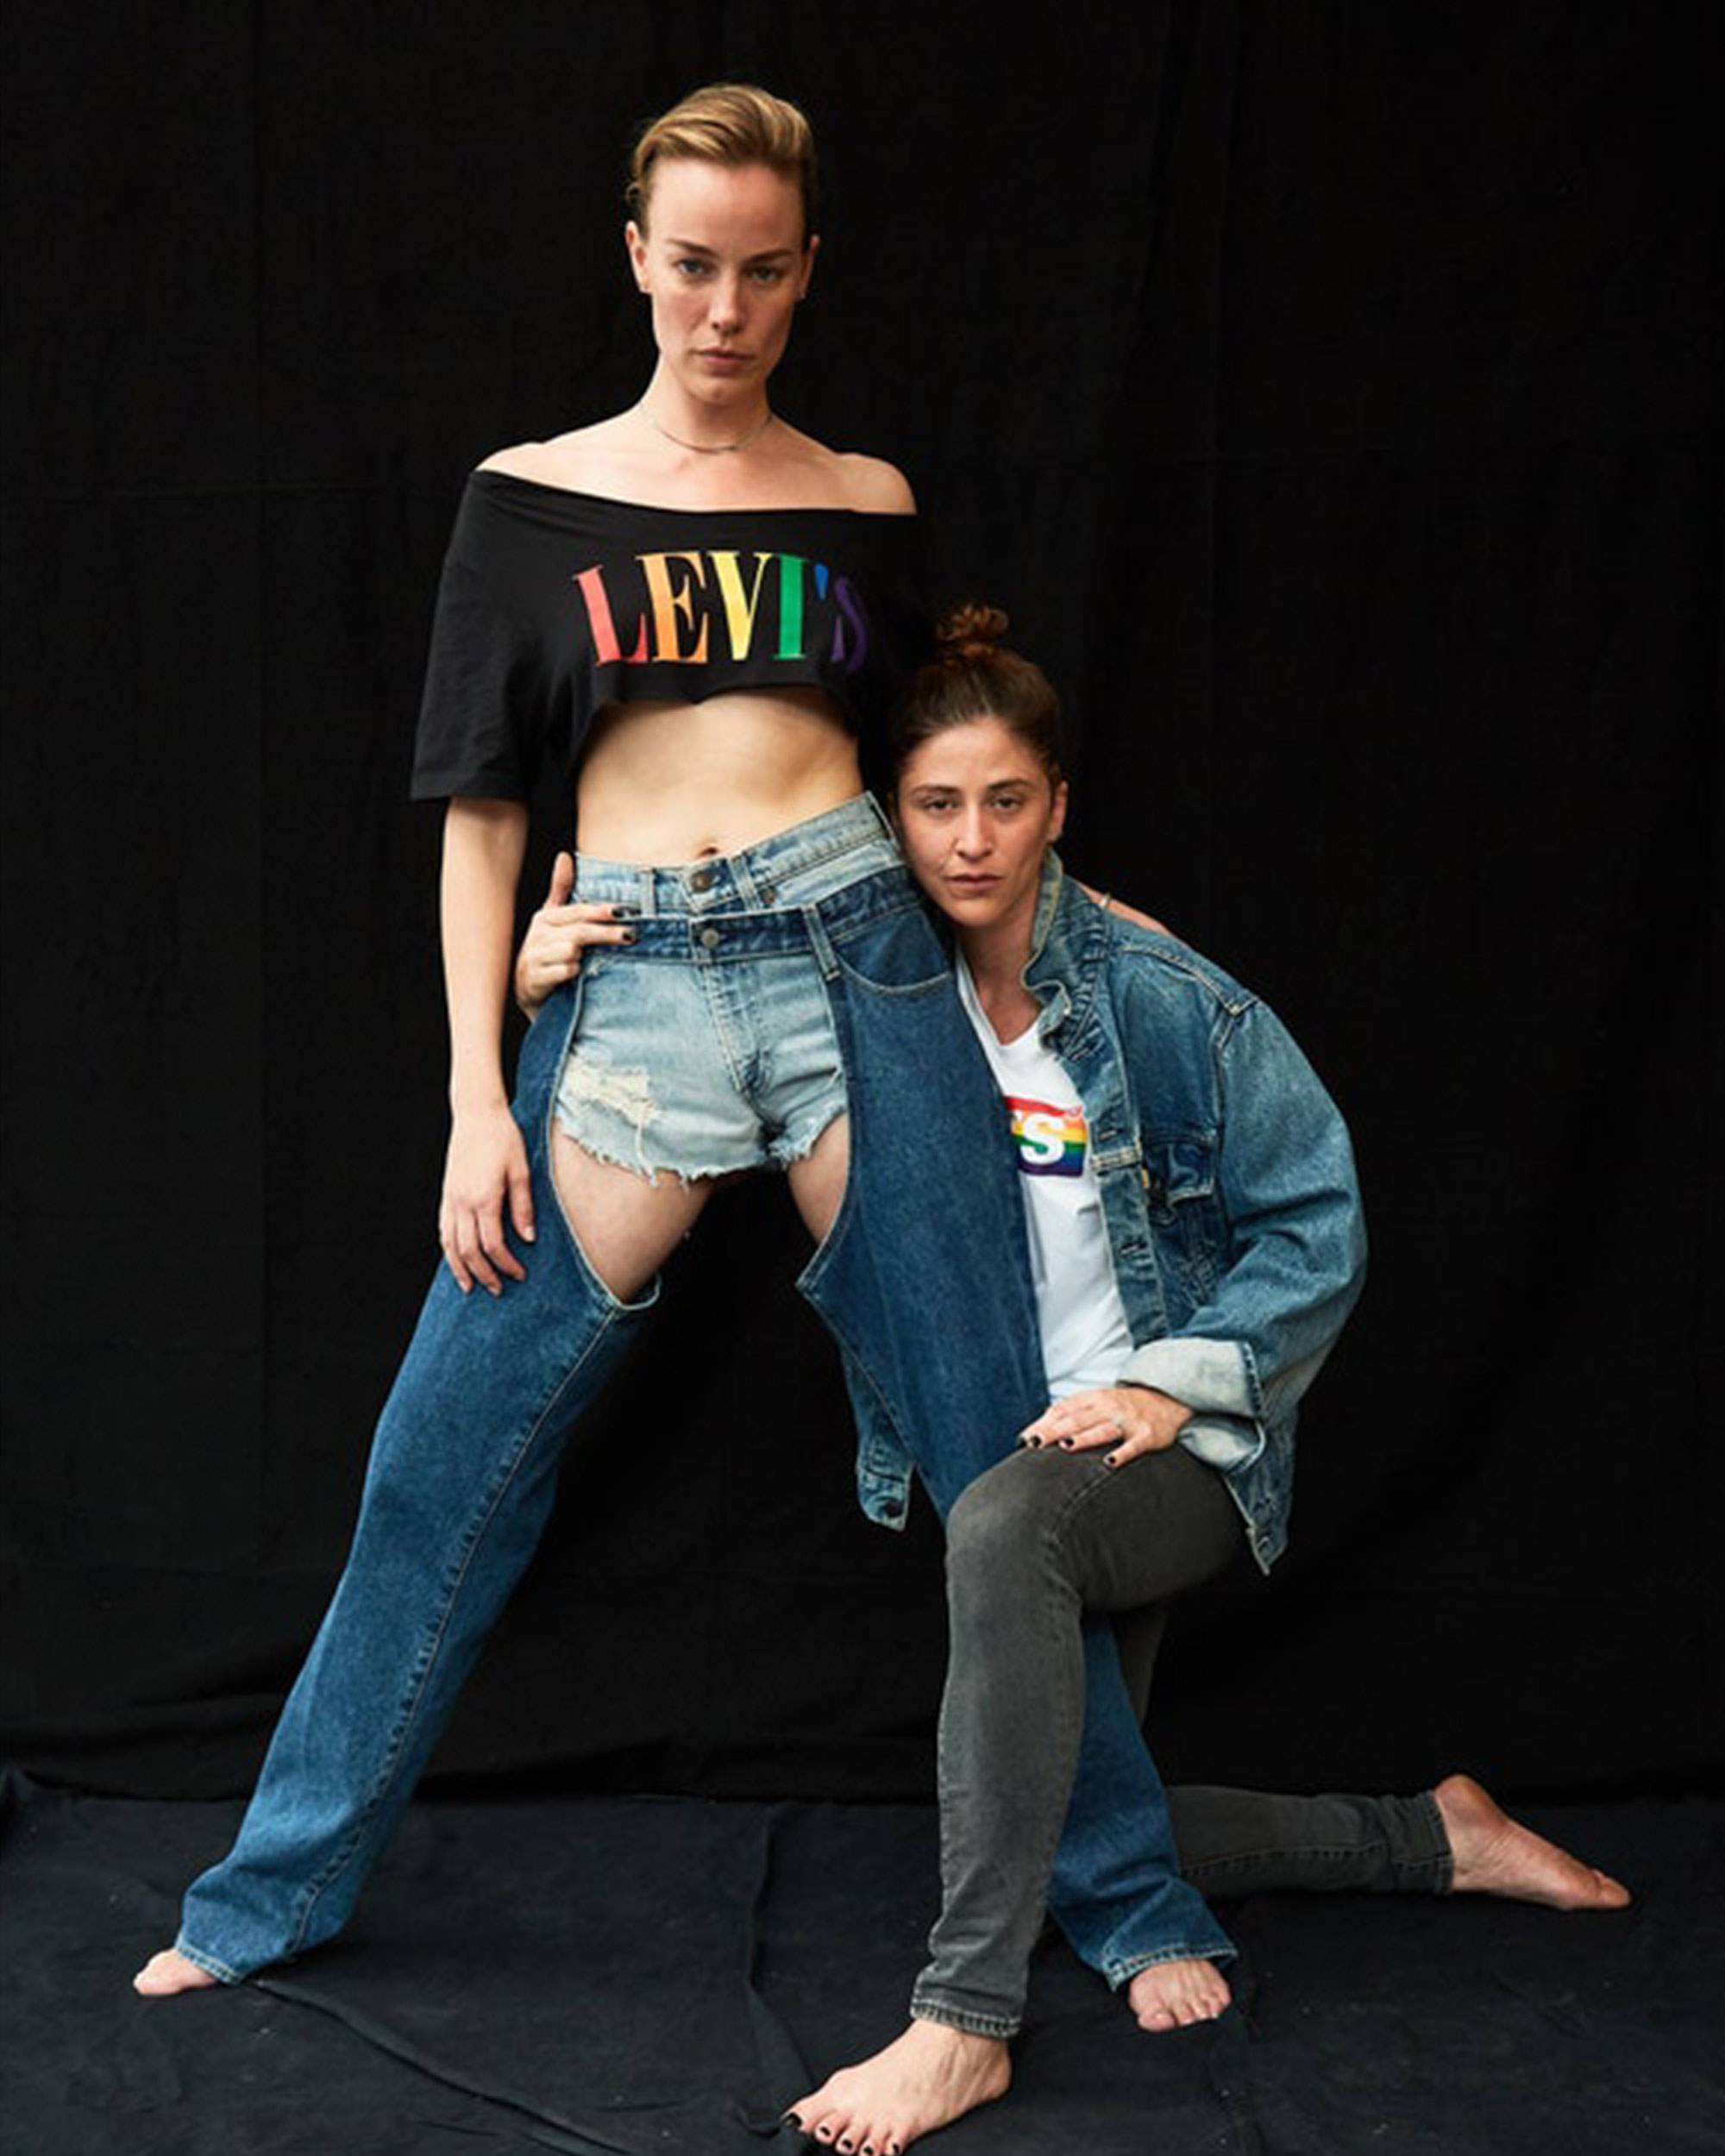 Models in pride apparel against black background